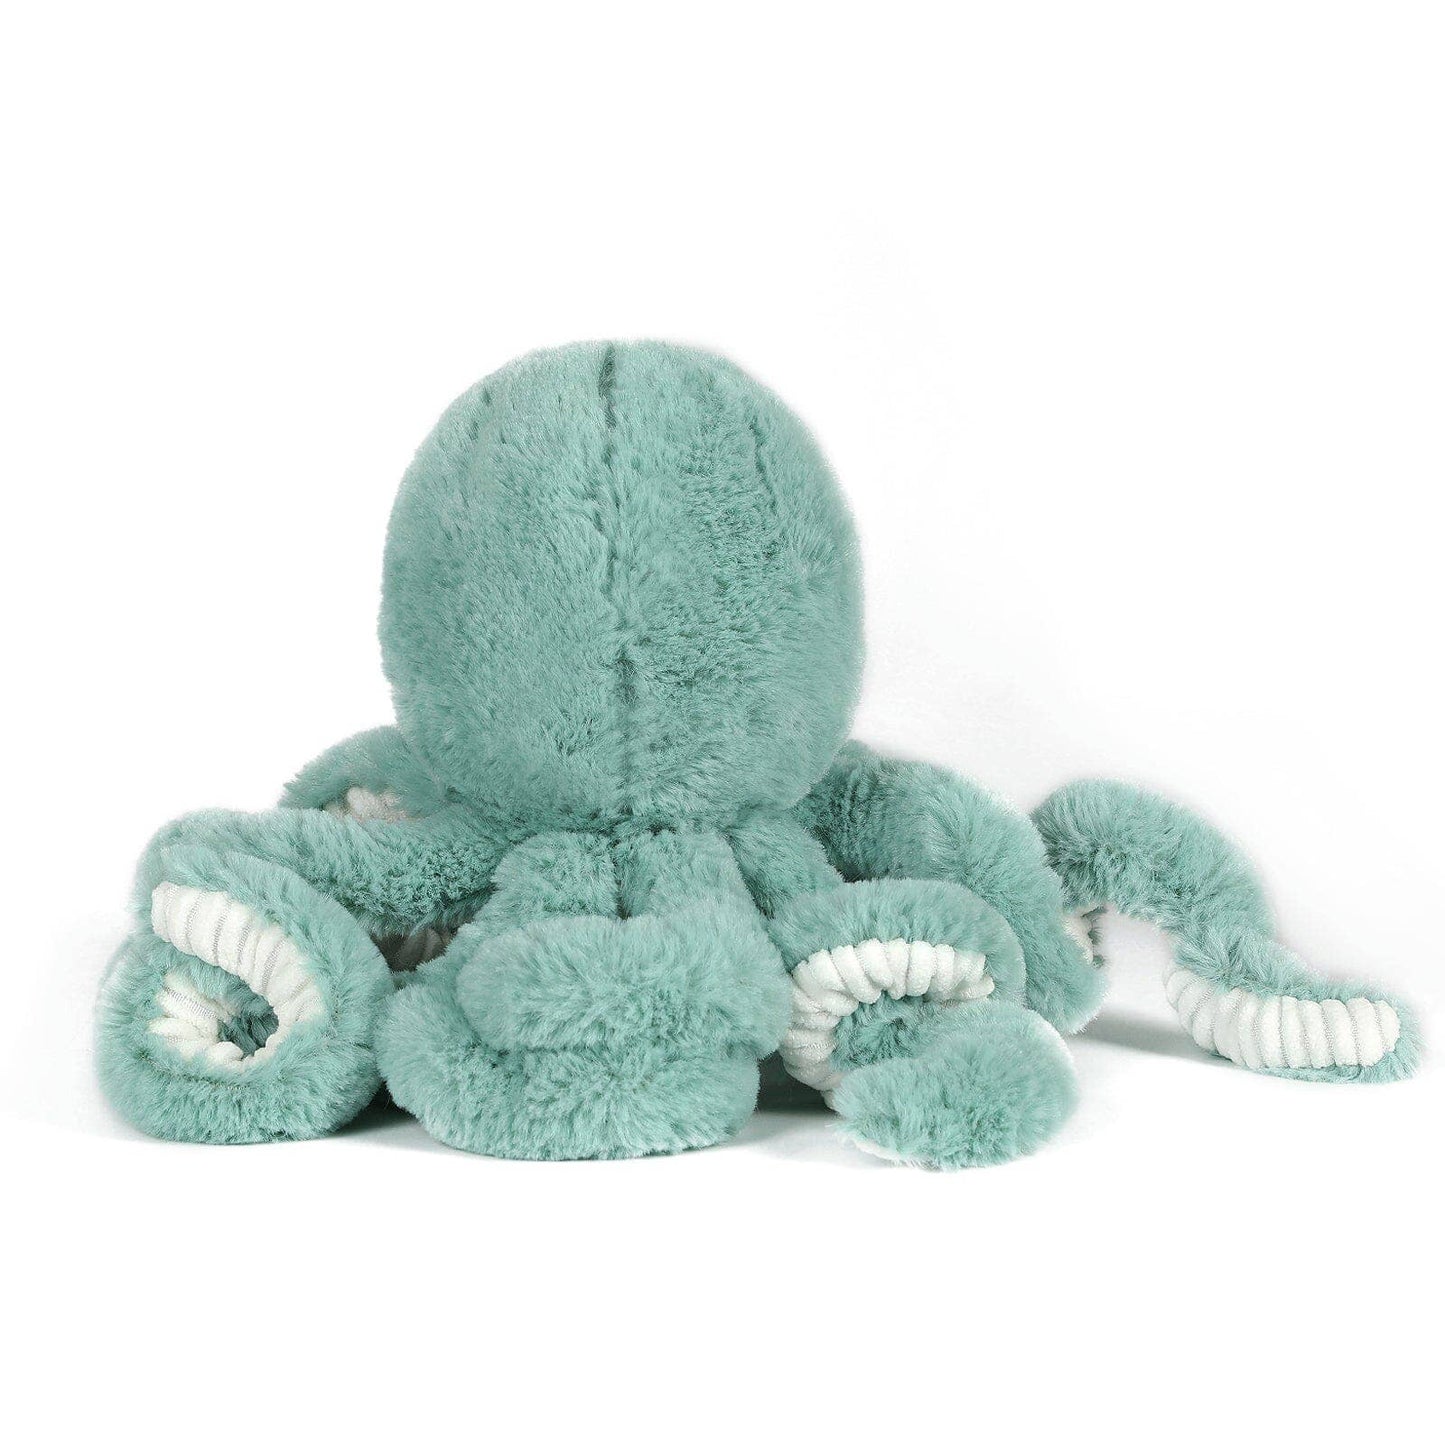 Little Reef Octopus